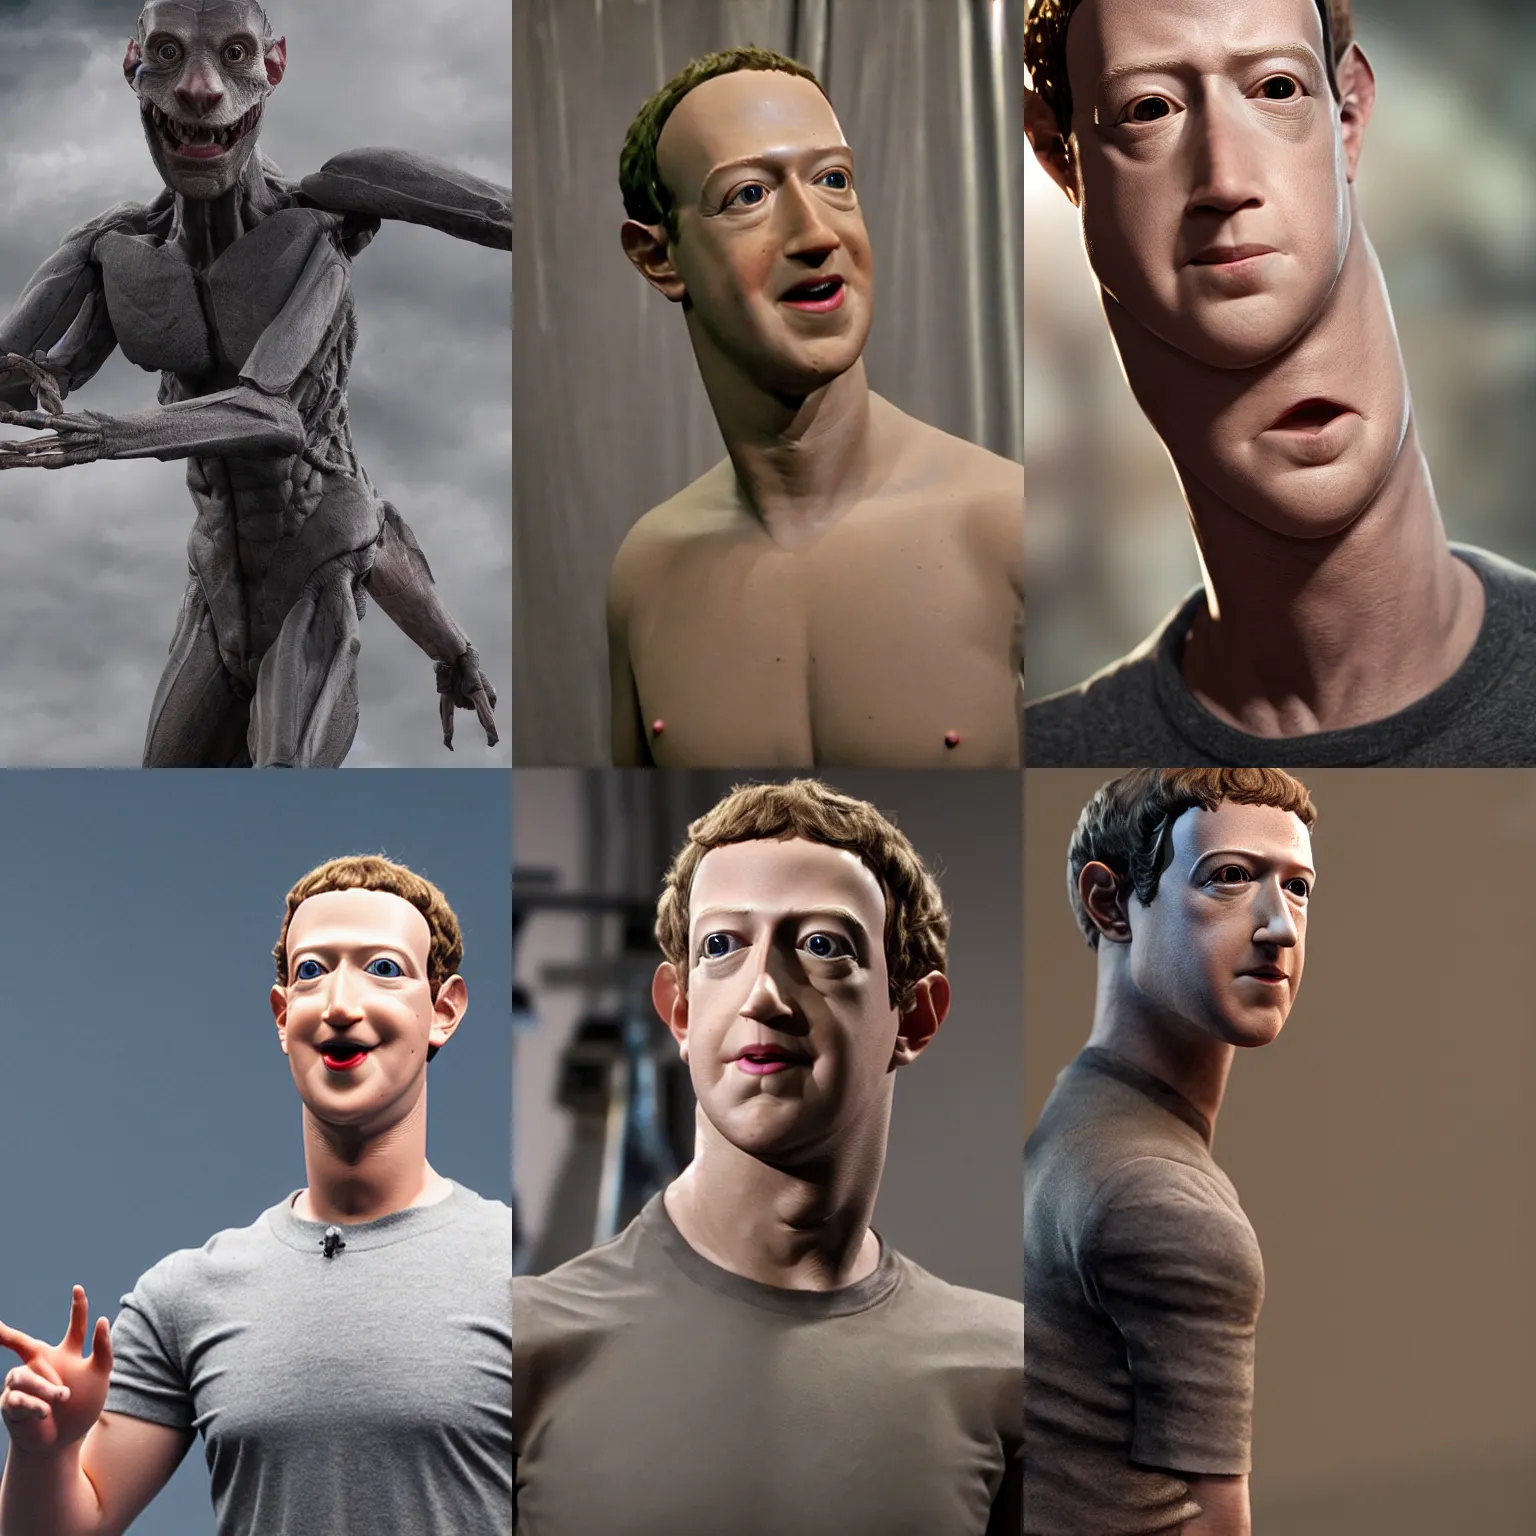 Prompt: Mark Zuckerberg animatronic built by Stan Winston Studios, practical effects, 4k, high quality